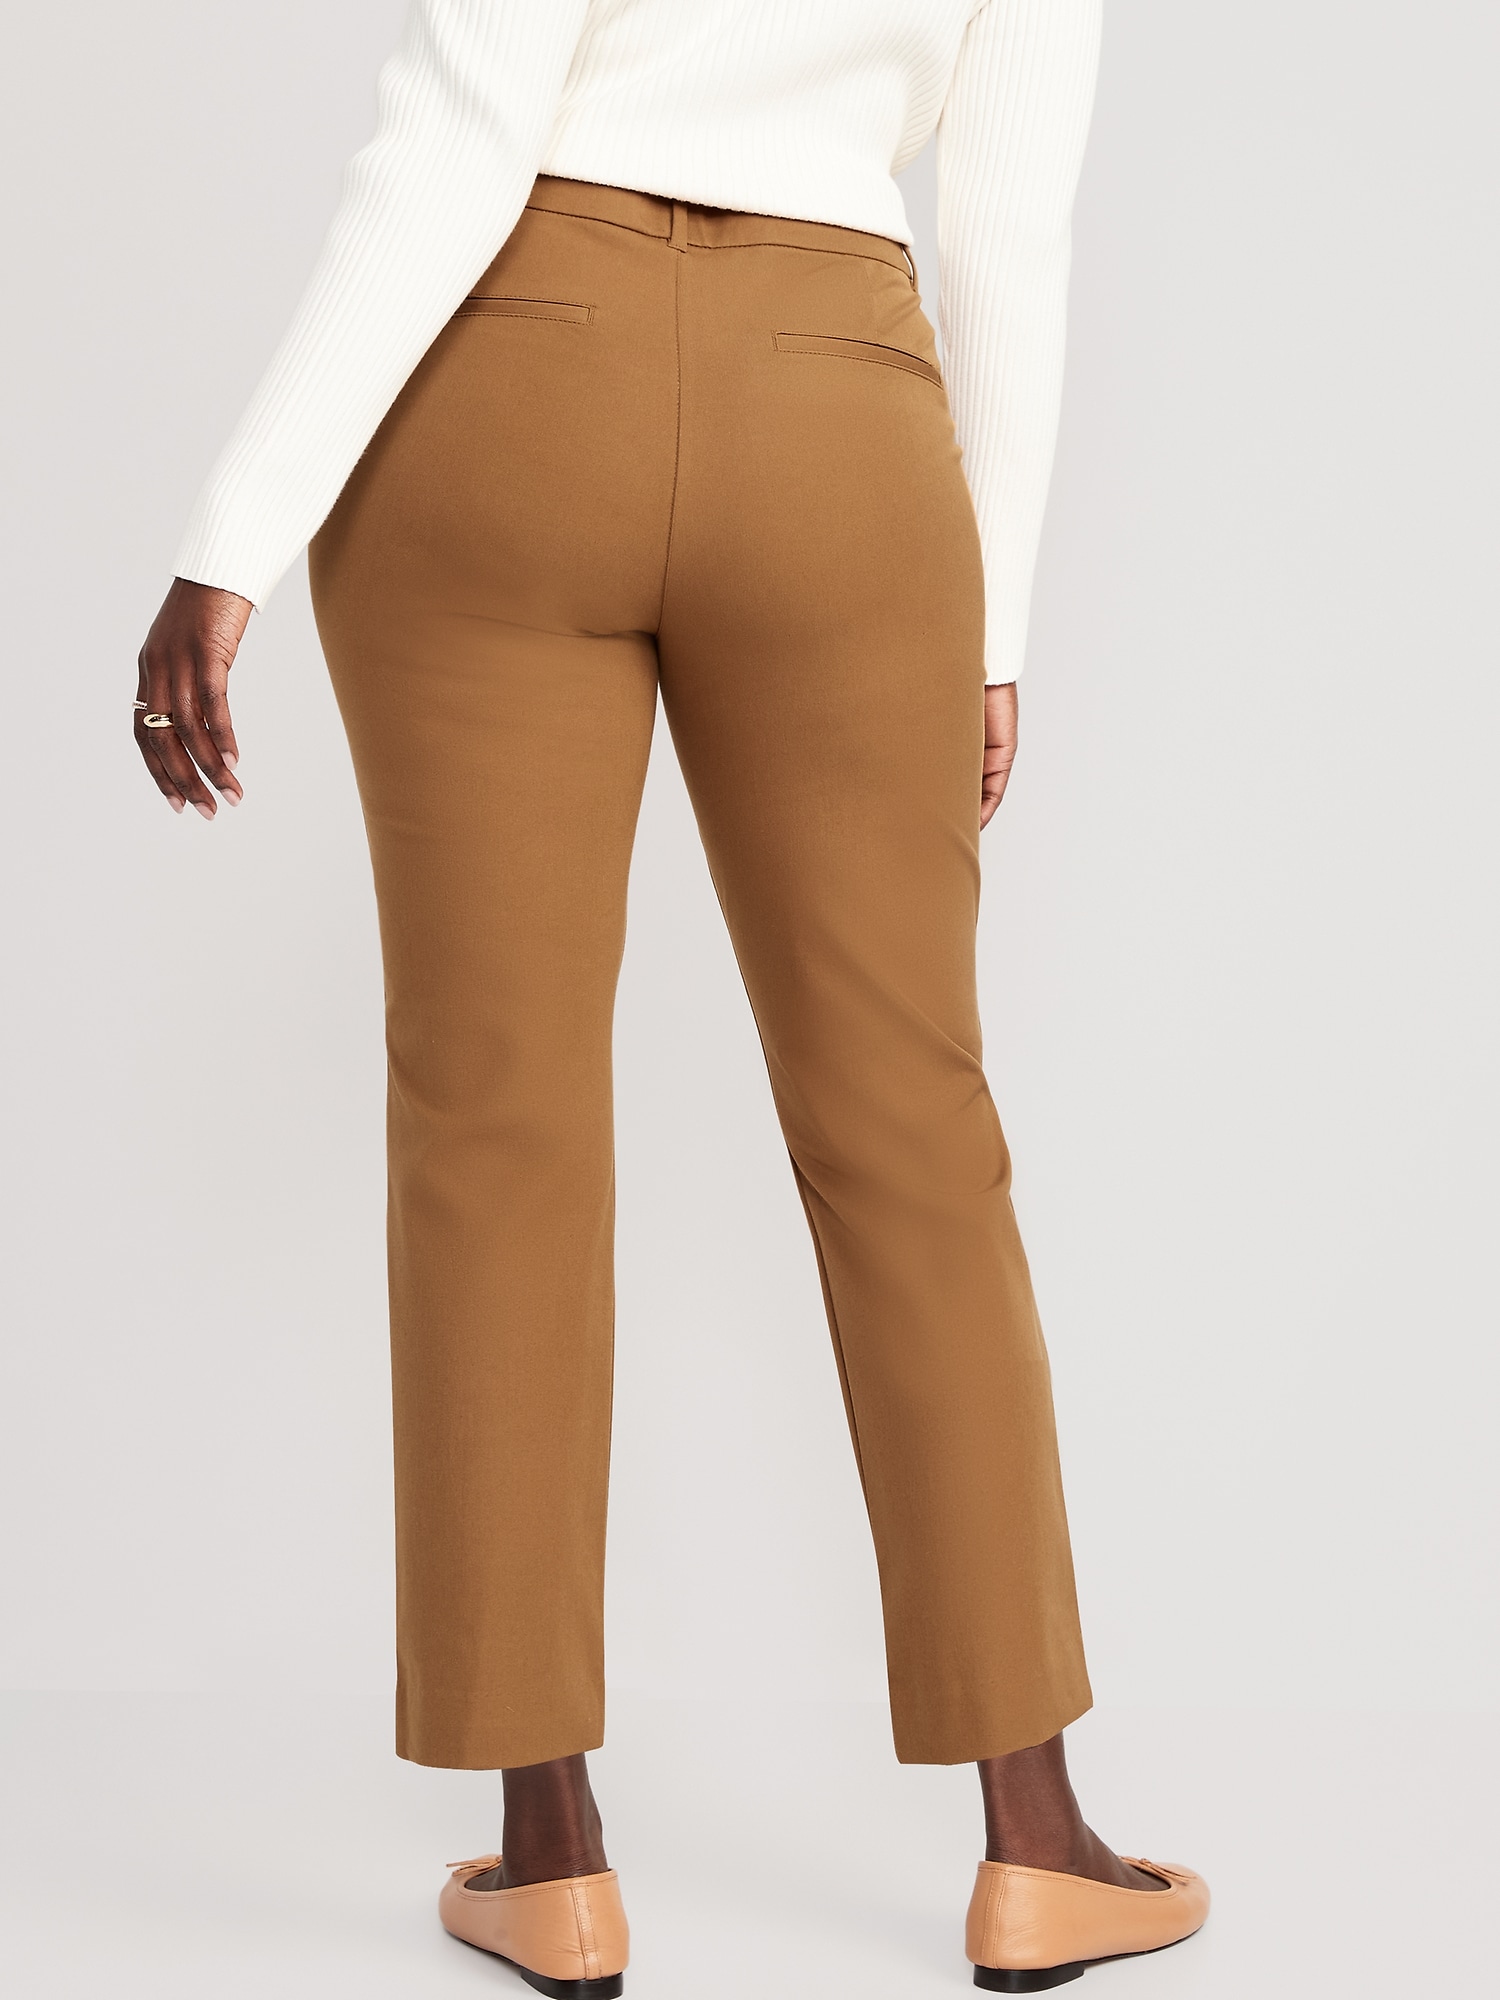 NEXT Womens Stone Beige Roll Hem Ankle Grazer Crop Chino Trousers | eBay